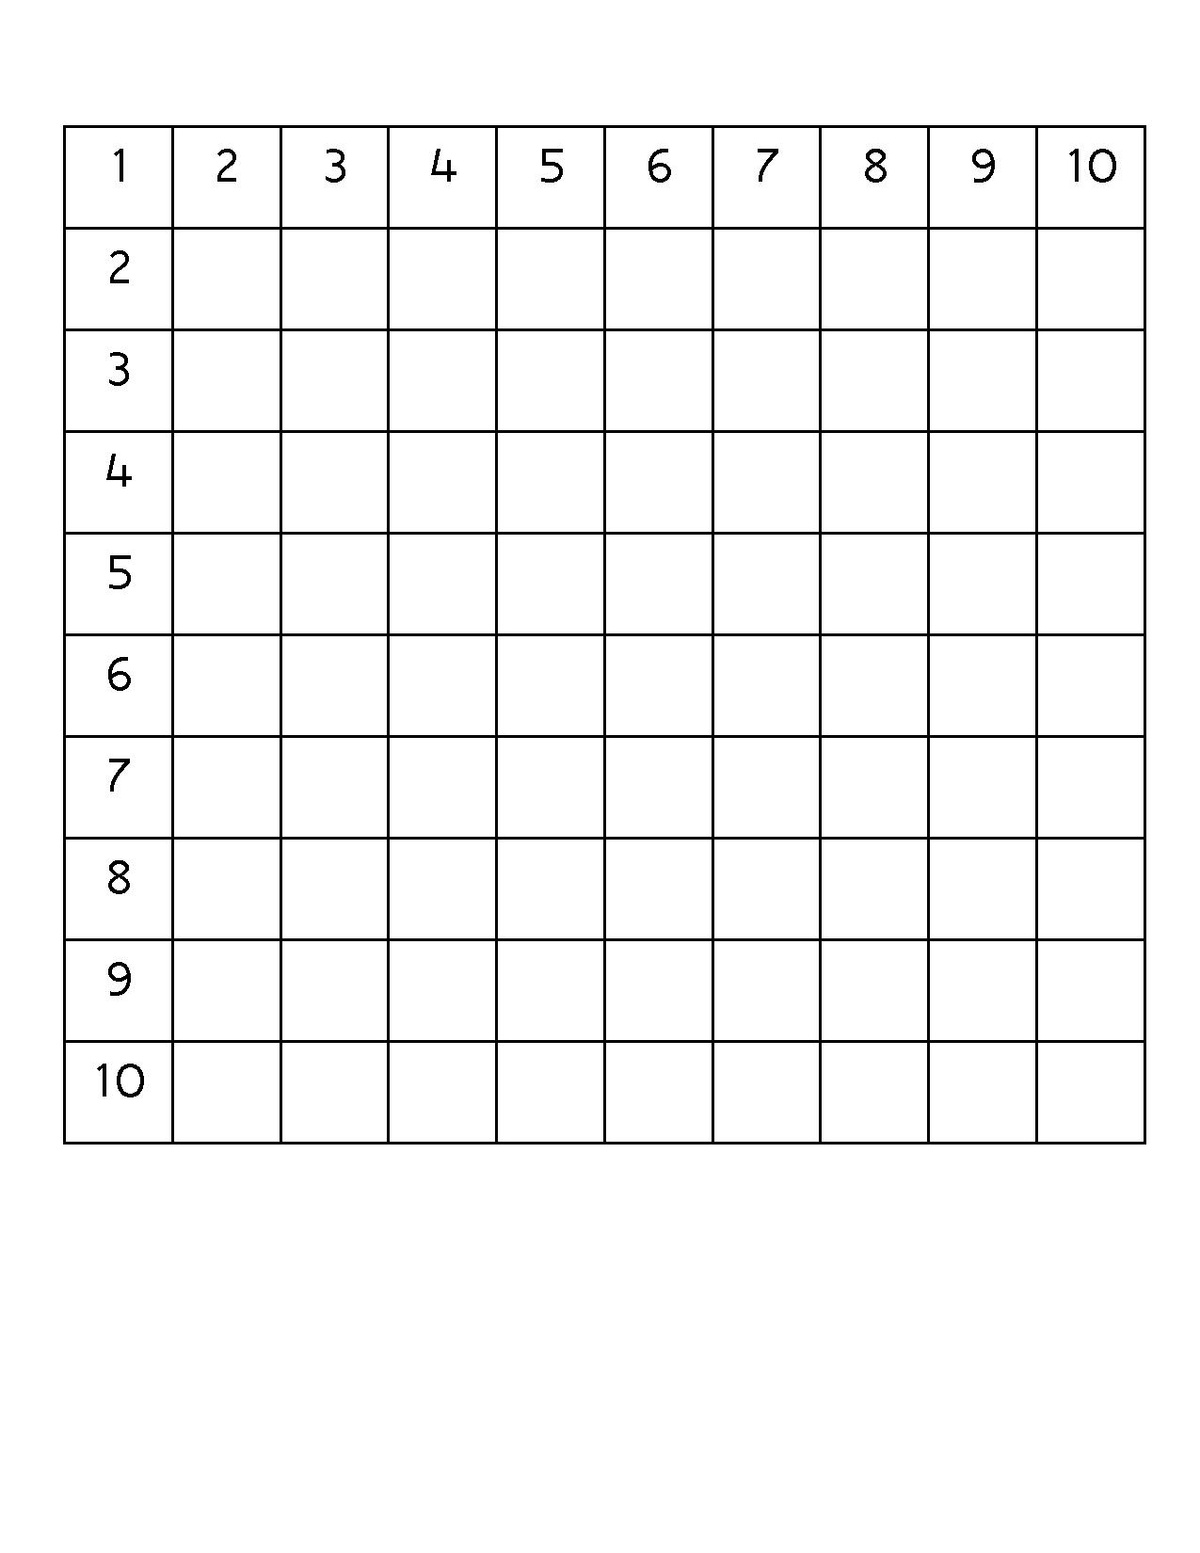 file multiplication chart 5 b and w pdf montessori album